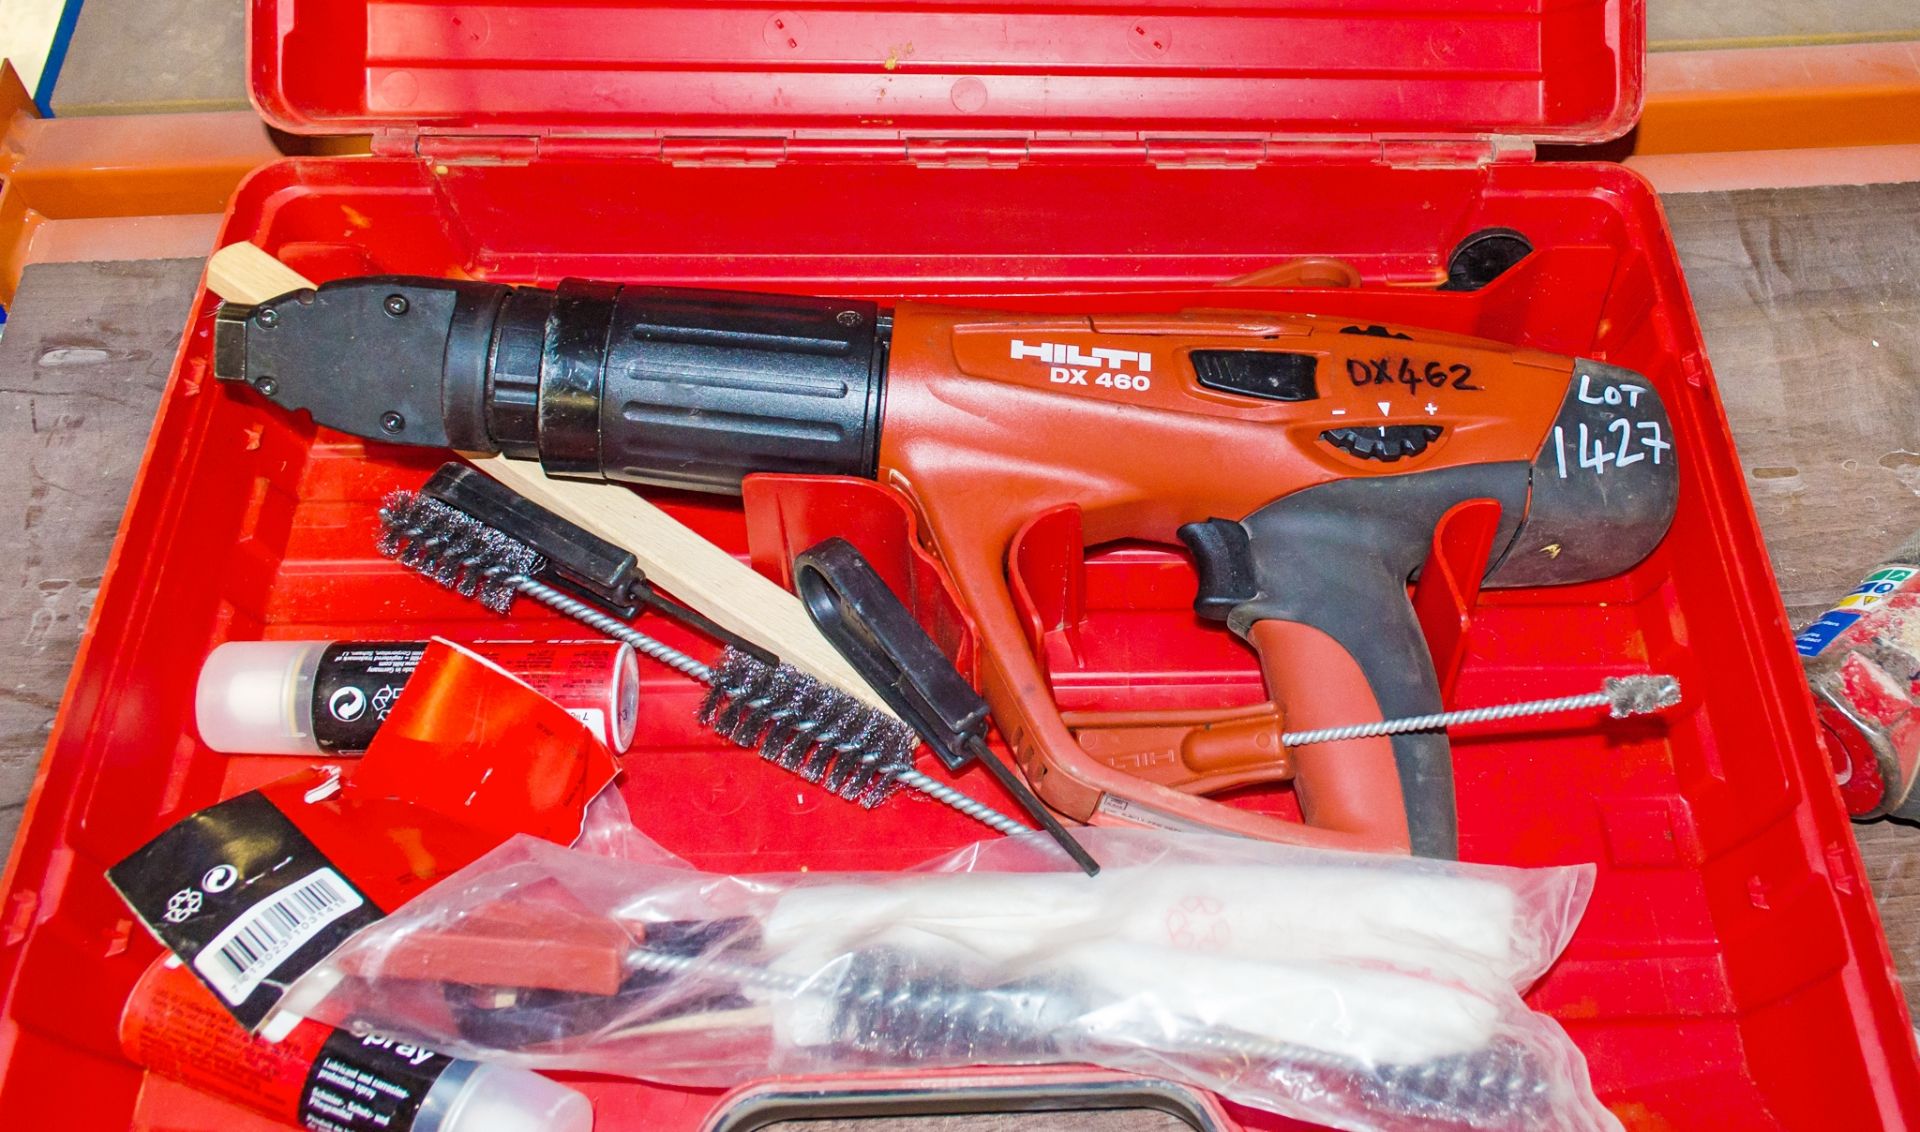 Hilti DX460 nail gun c/w carry case DX462